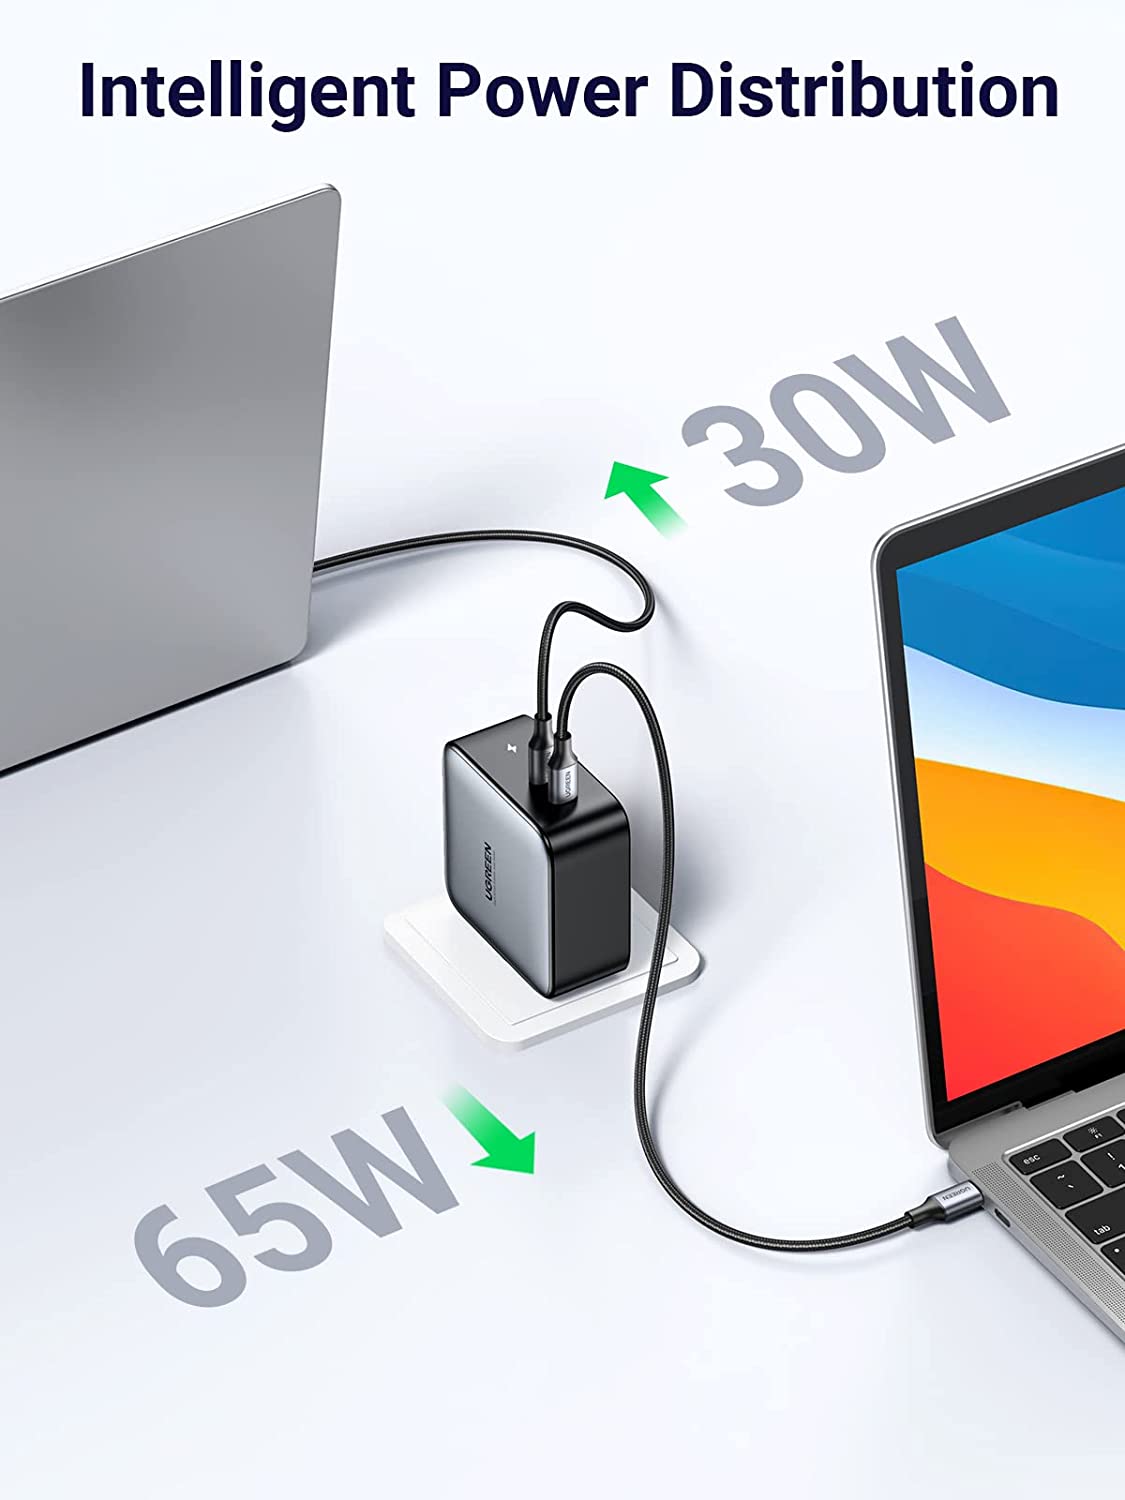 UGREEN Nexode 65W Chargeur USB C 4 Ports avec GaN II Tech - Câble A